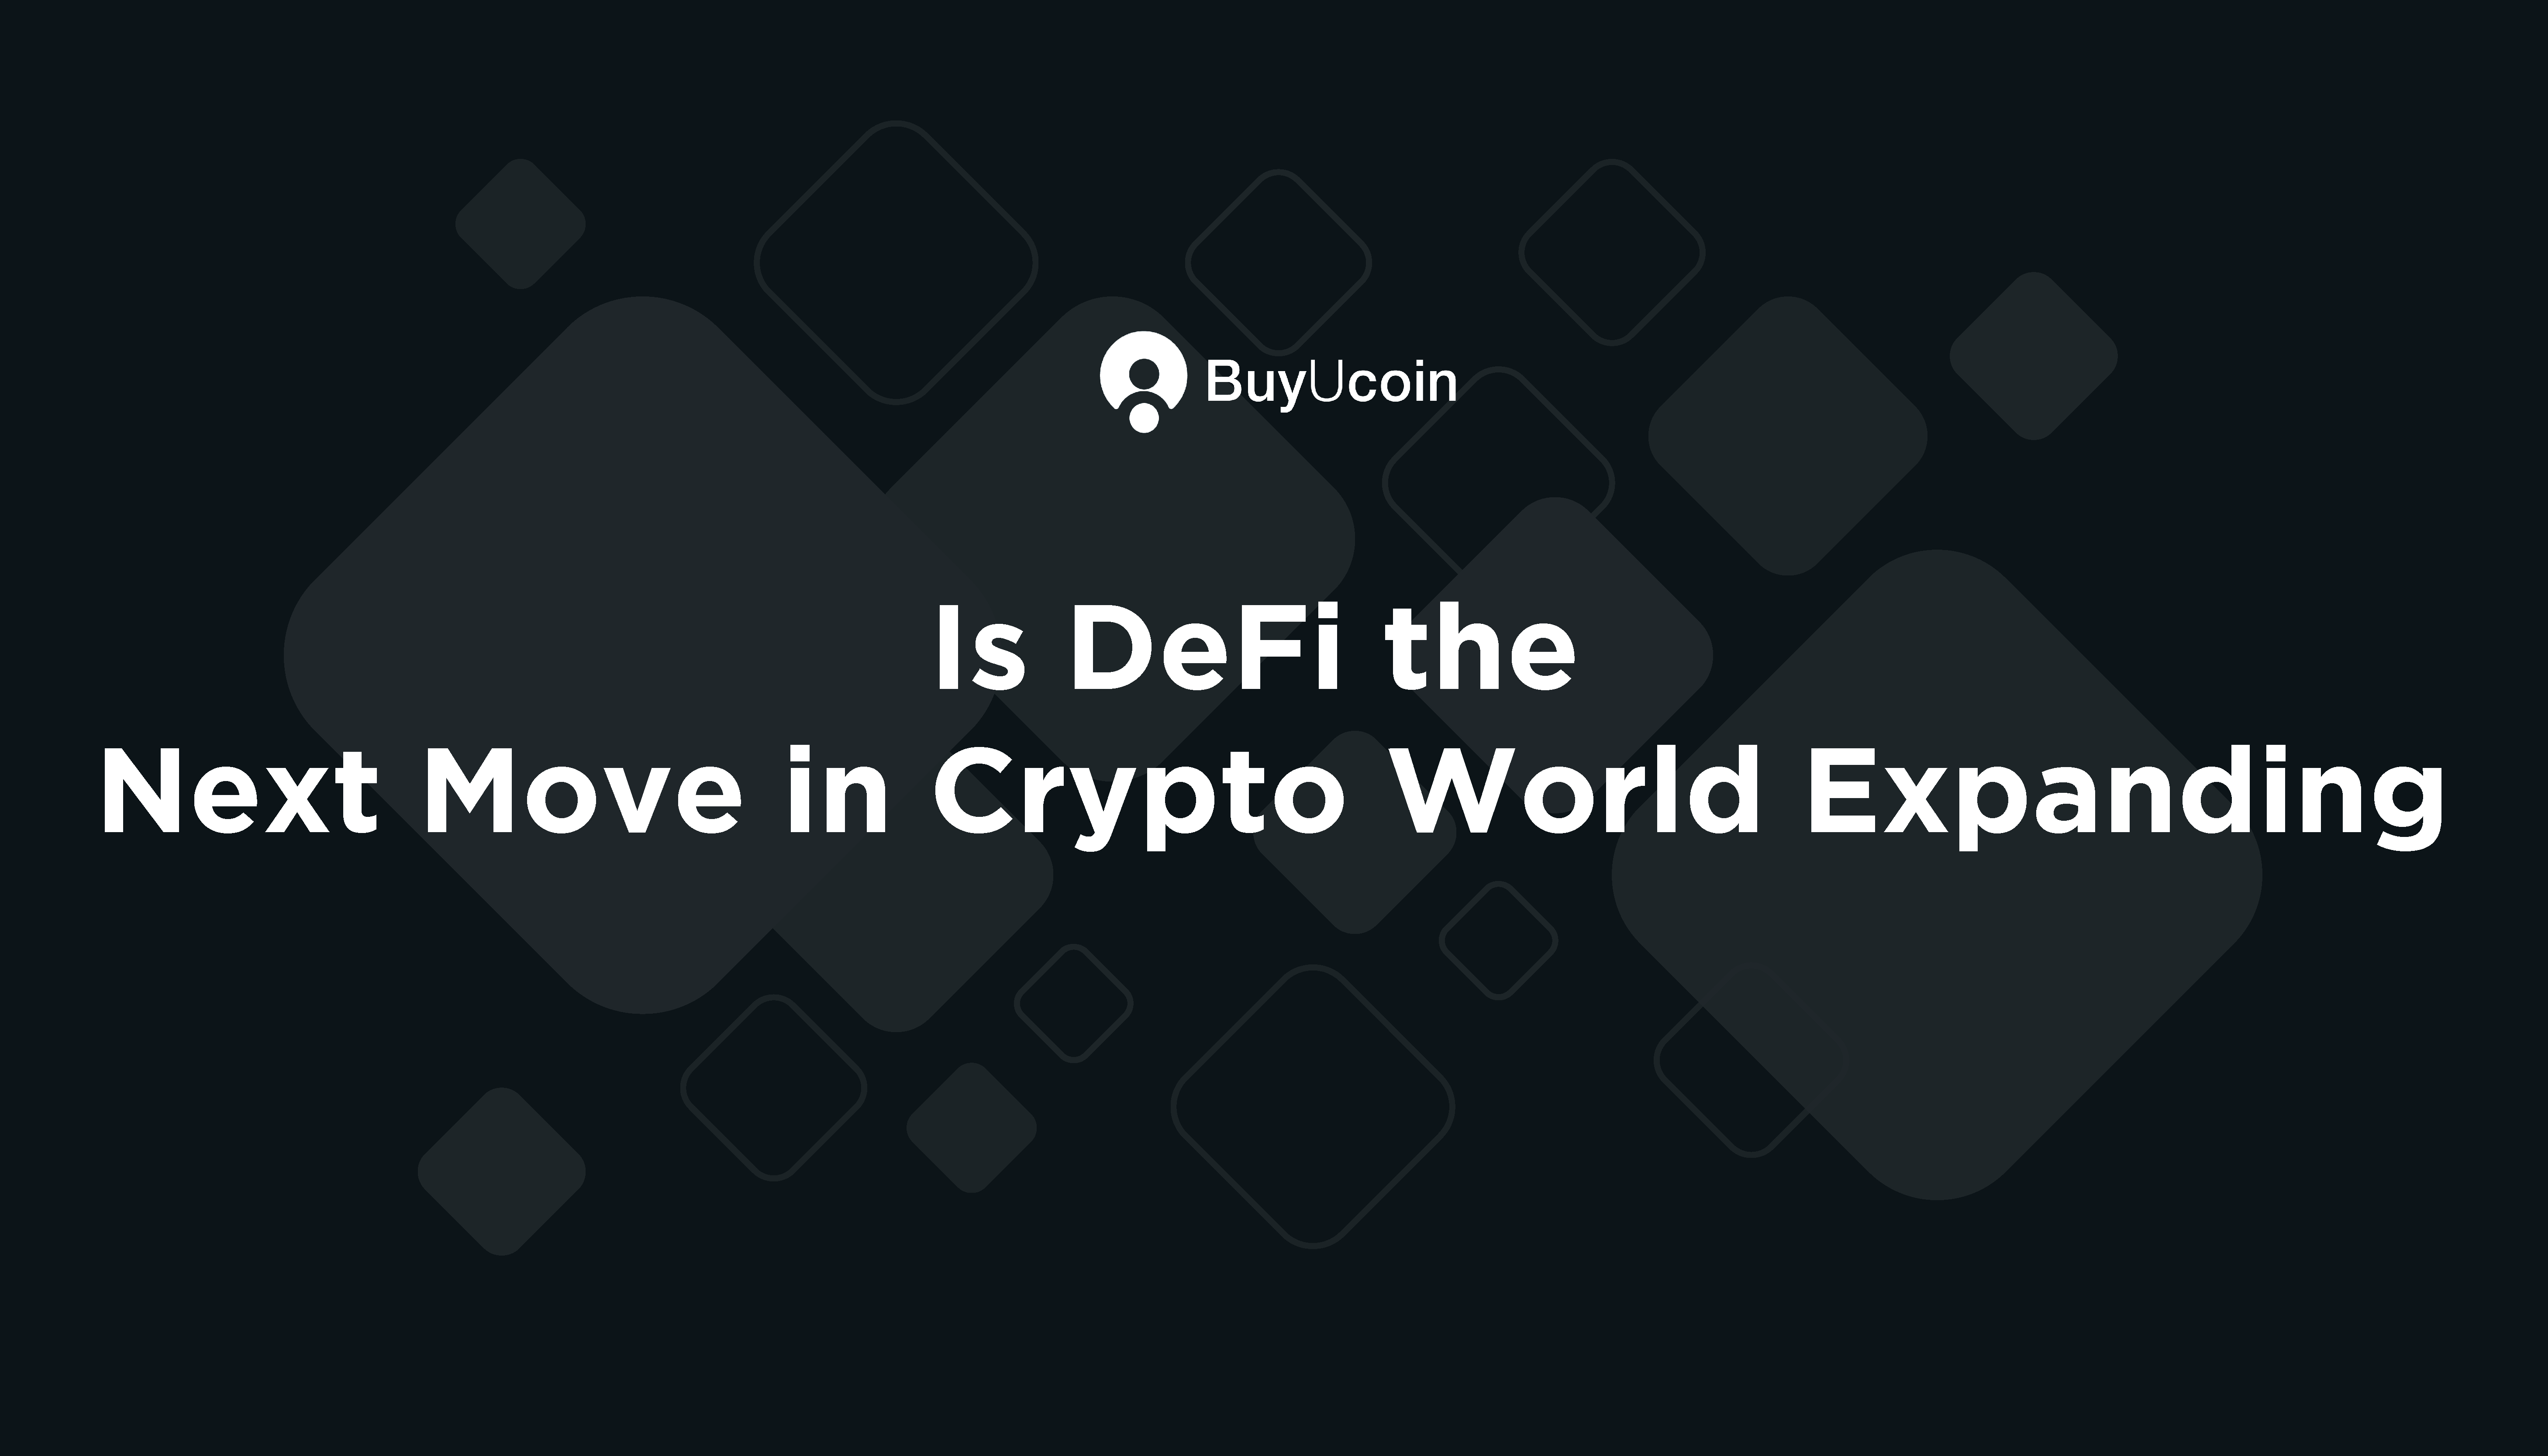 Defi the next move in crypto world